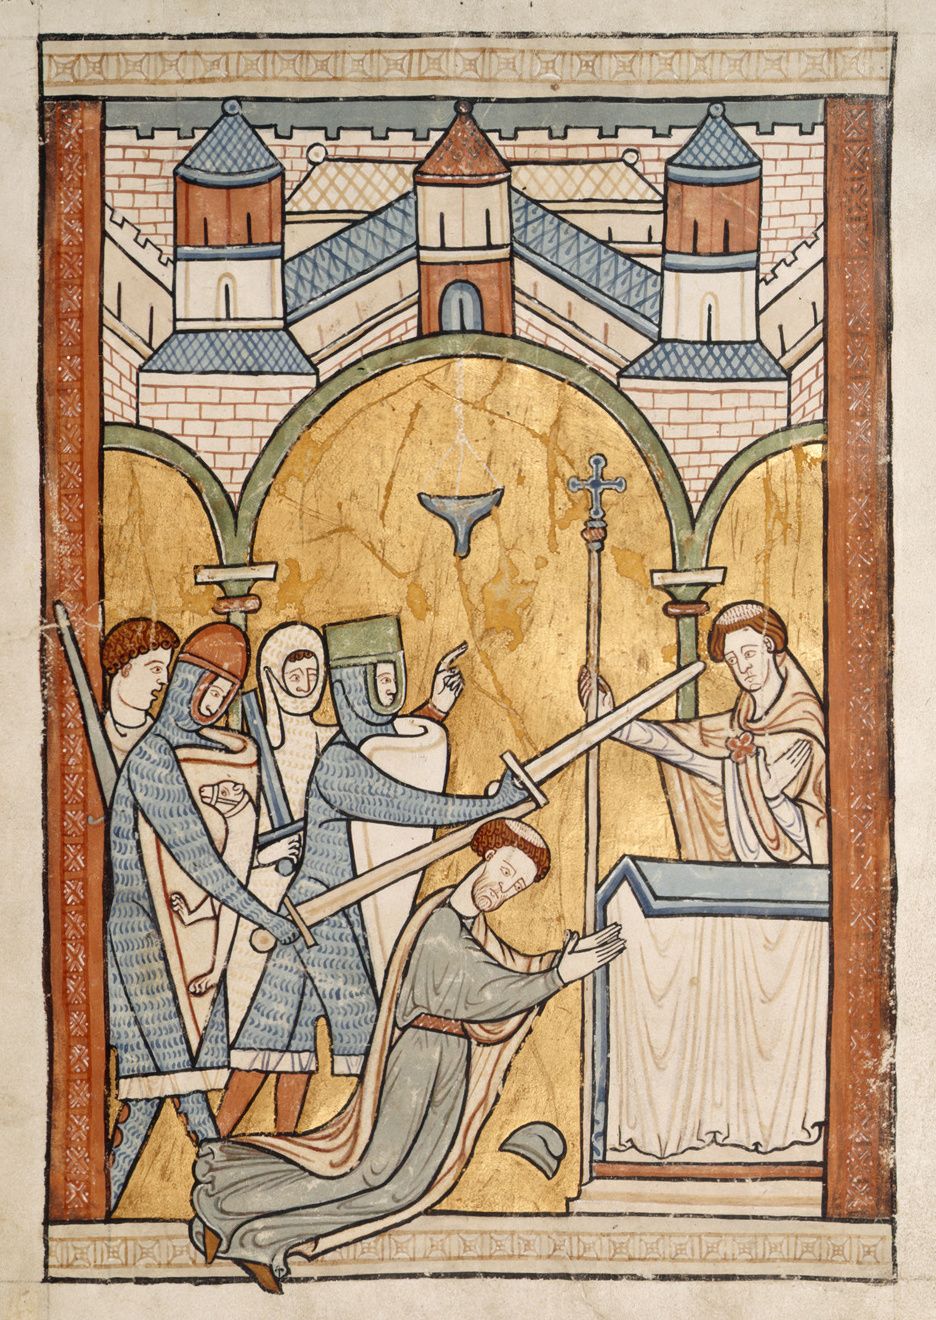 Murder of Thomas Becket